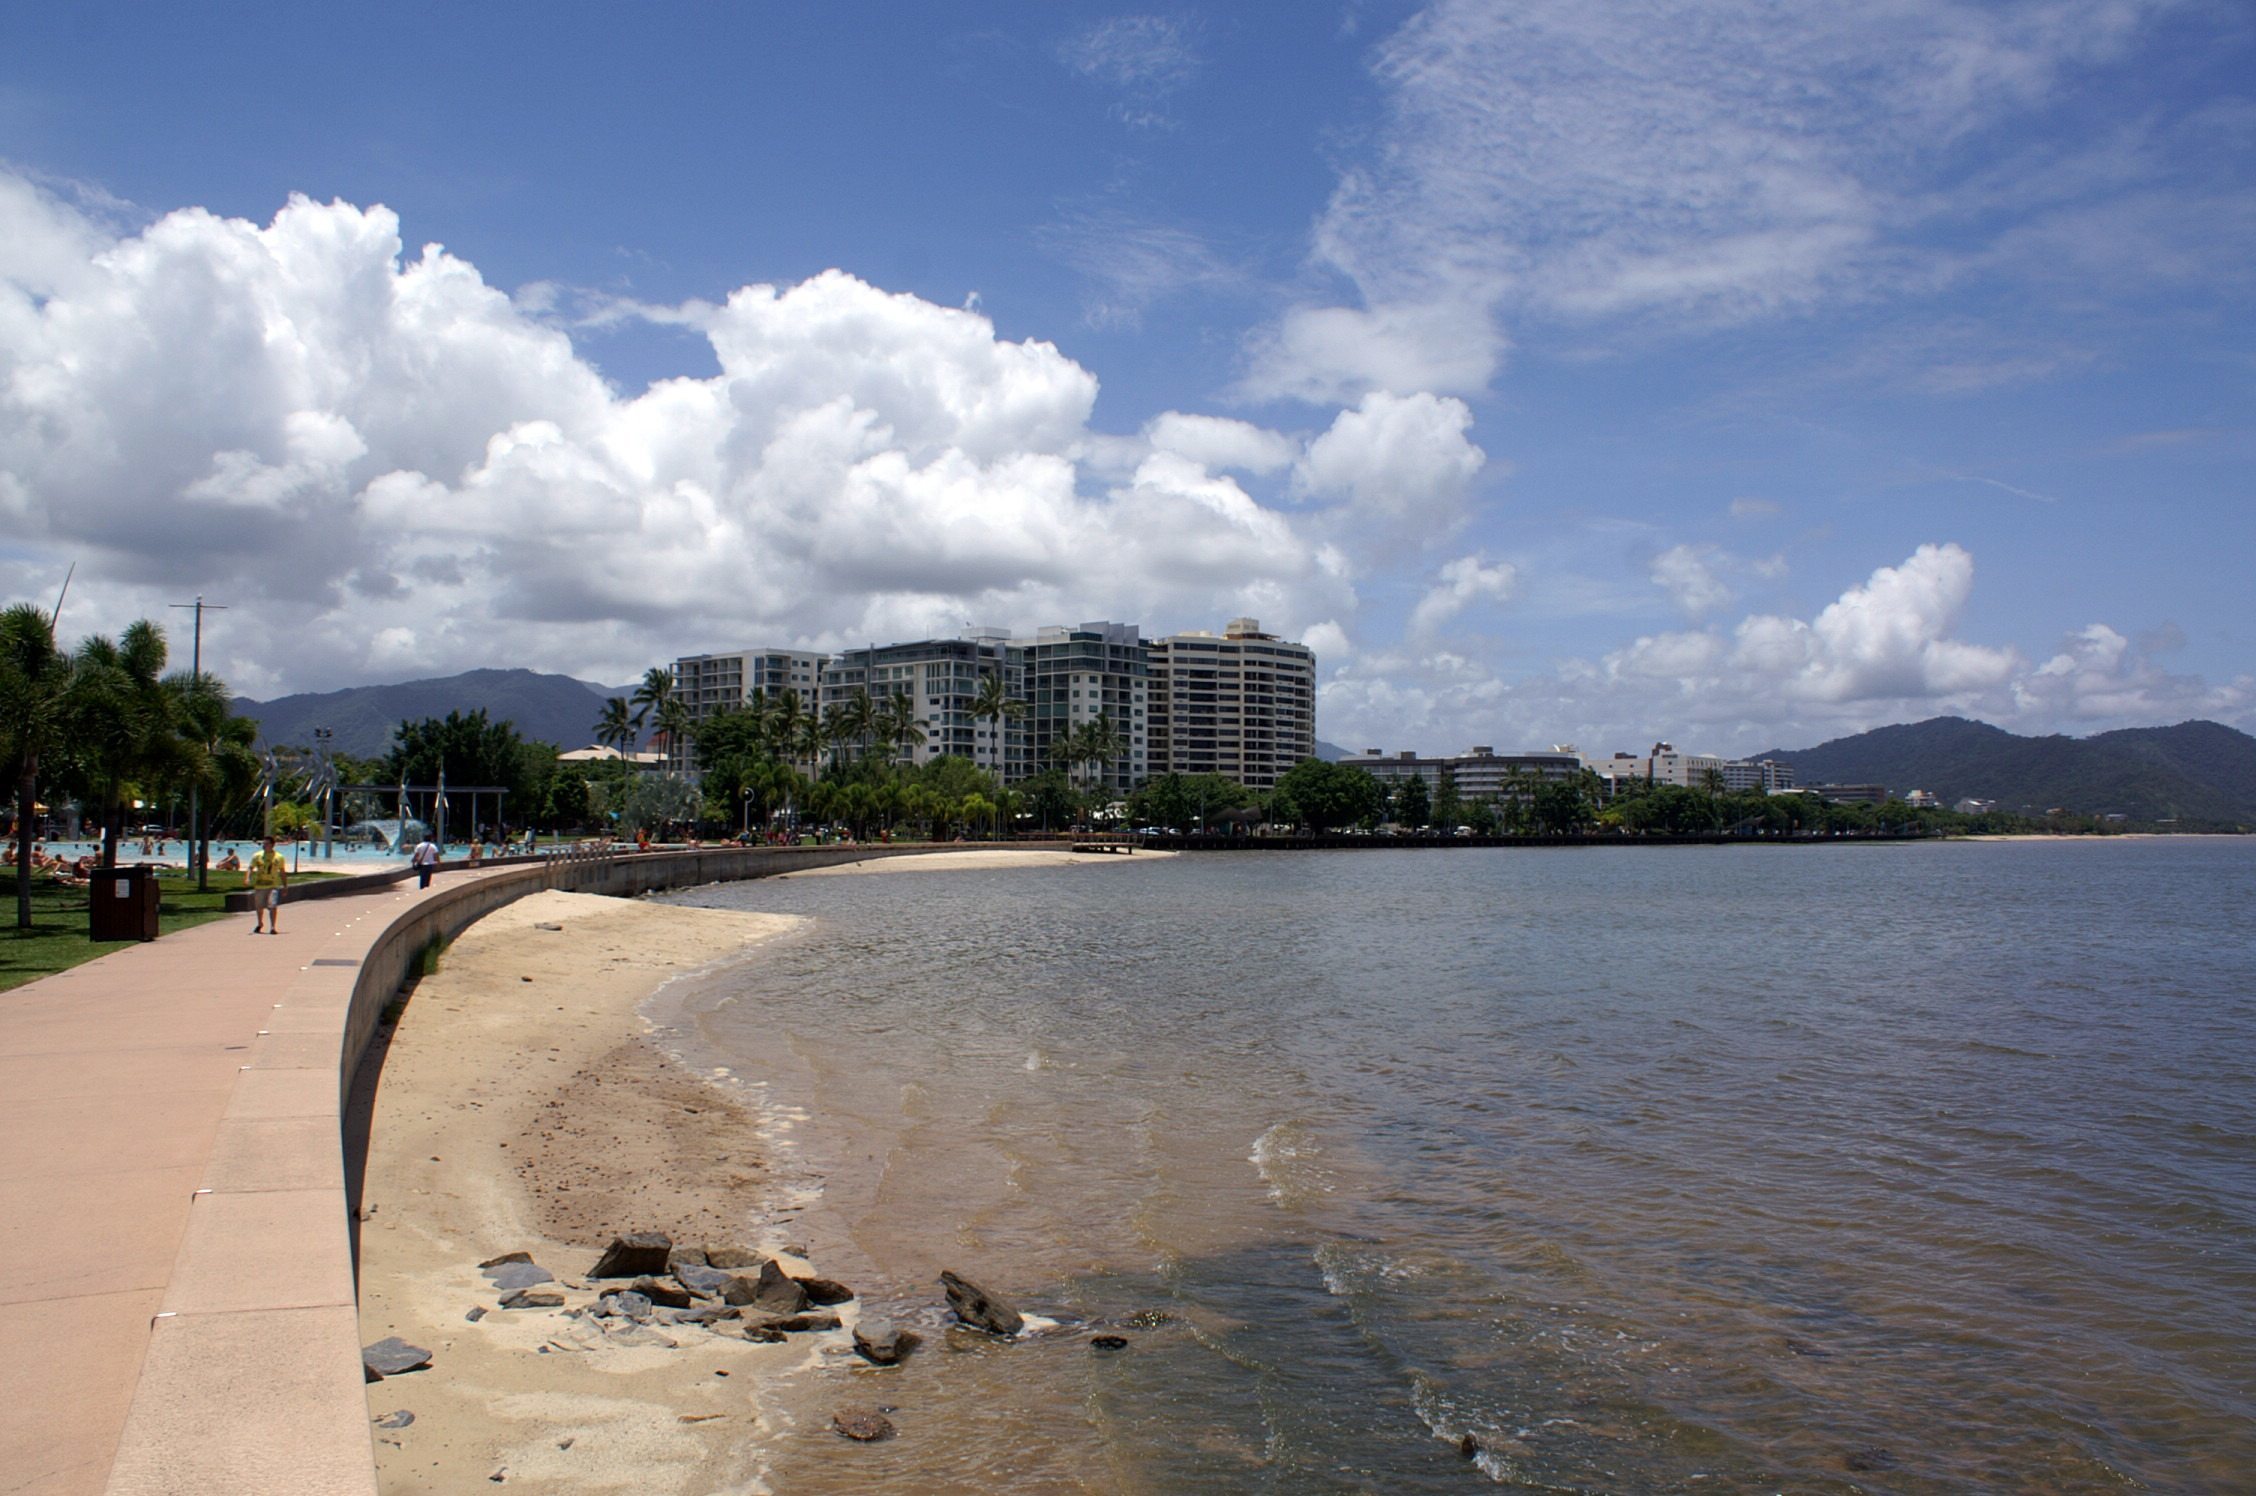 The Esplanade in Cairns' waterfront